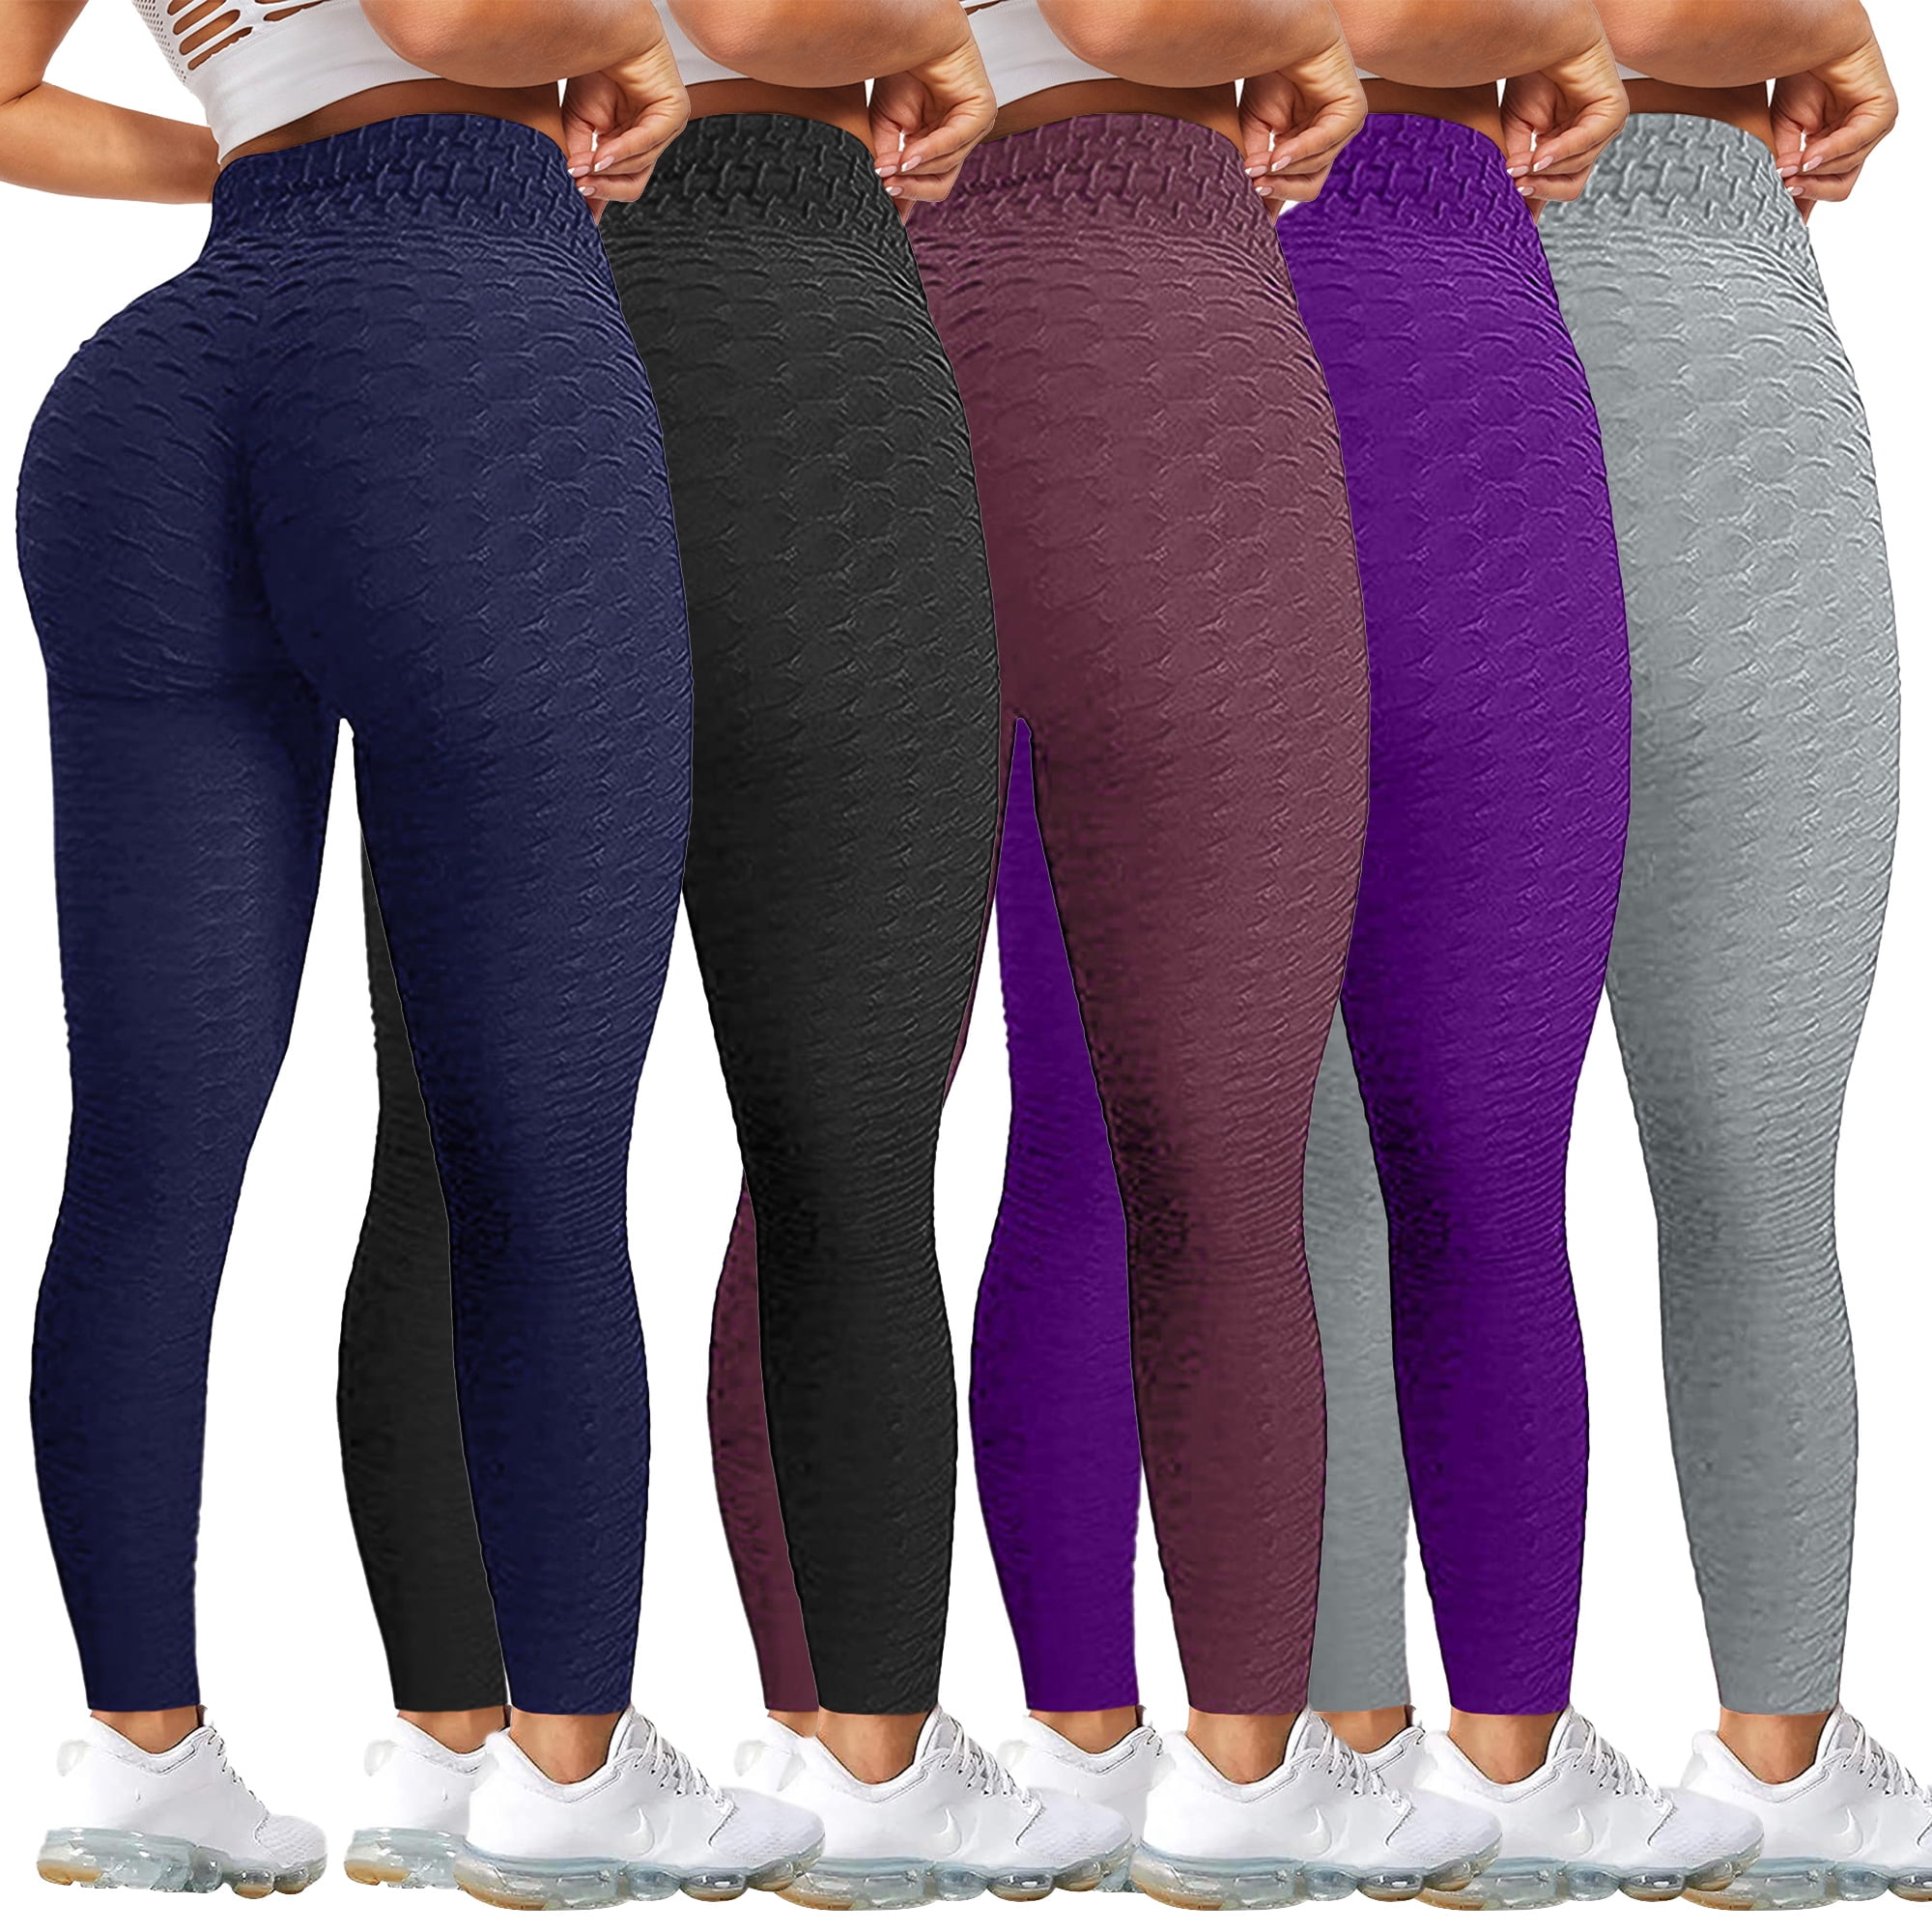 ♥Womens High Waist Yoga Short Pant Ladies Workout Fitness Training Running Tummy Control Yoga Pant Leggings 